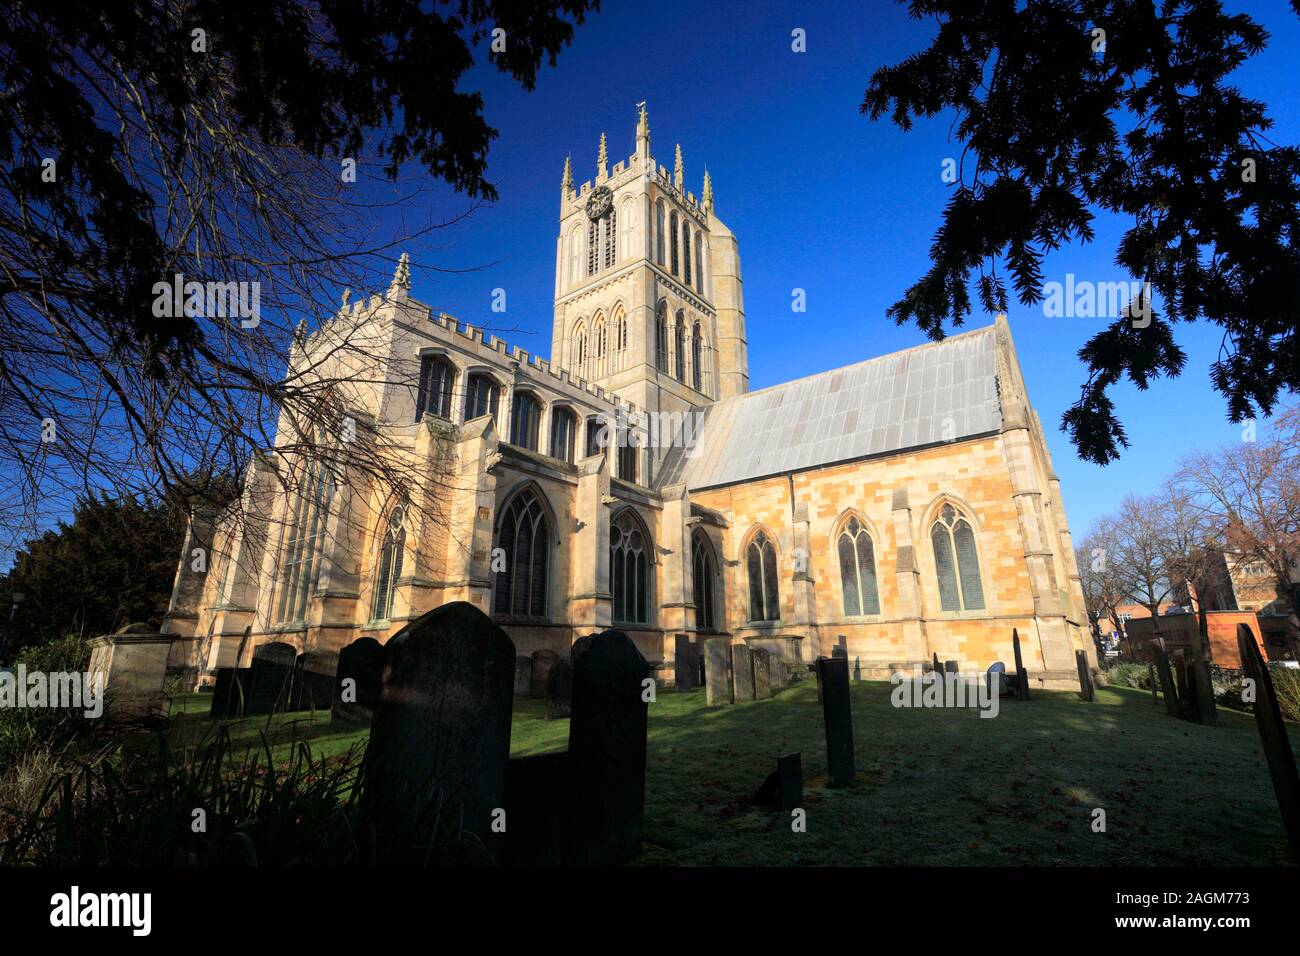 St Marys church, market town of Melton Mowbray, Leicestershire, England Stock Photo